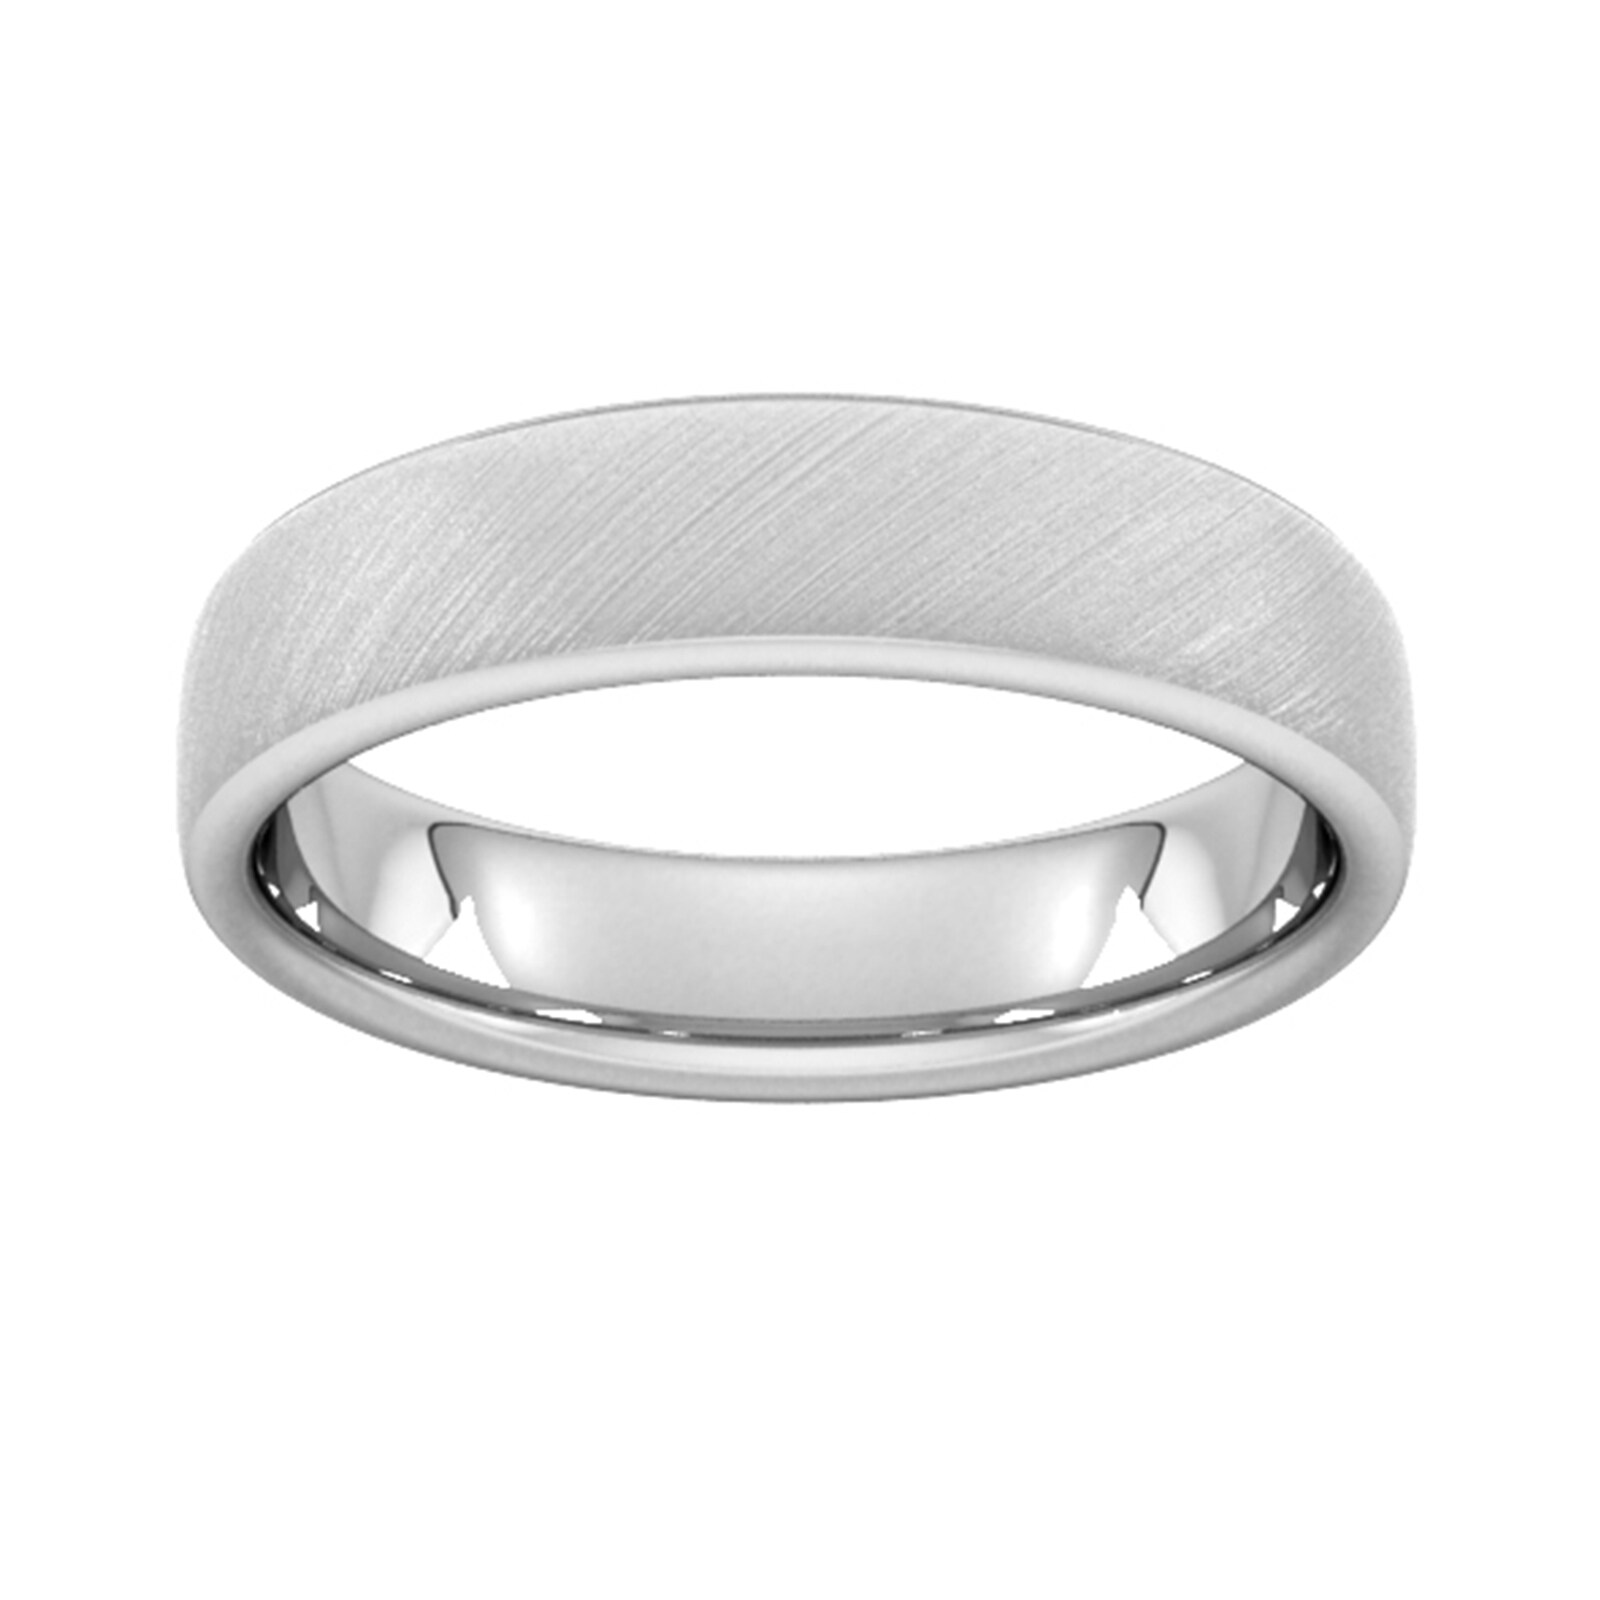 5mm Slight Court Heavy Diagonal Matt Finish Wedding Ring In 9 Carat White Gold - Ring Size M